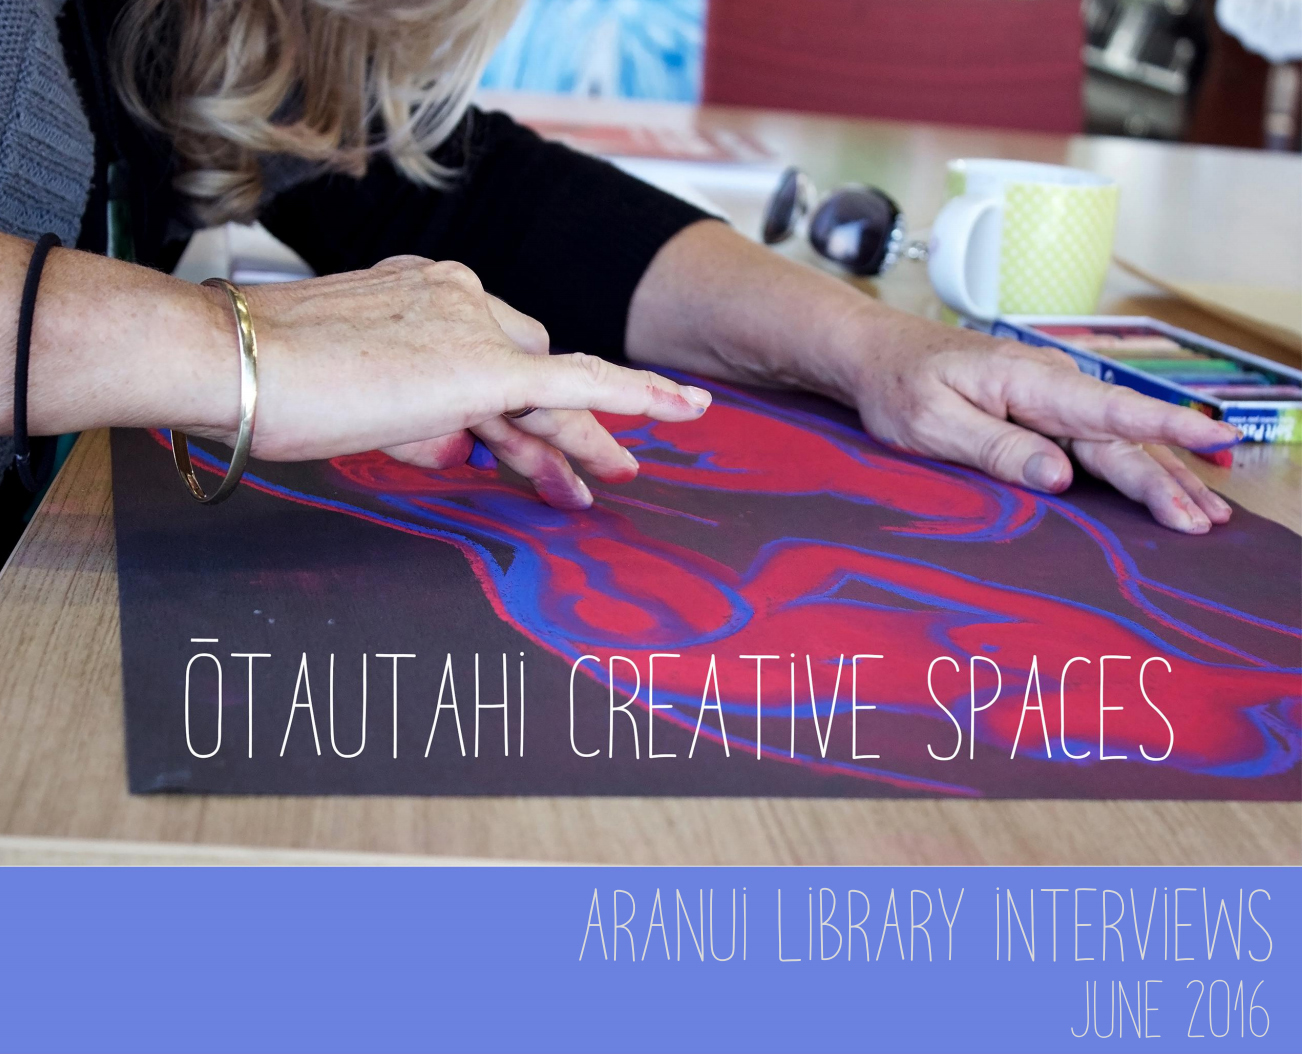 Aranui Library Interviews 2016